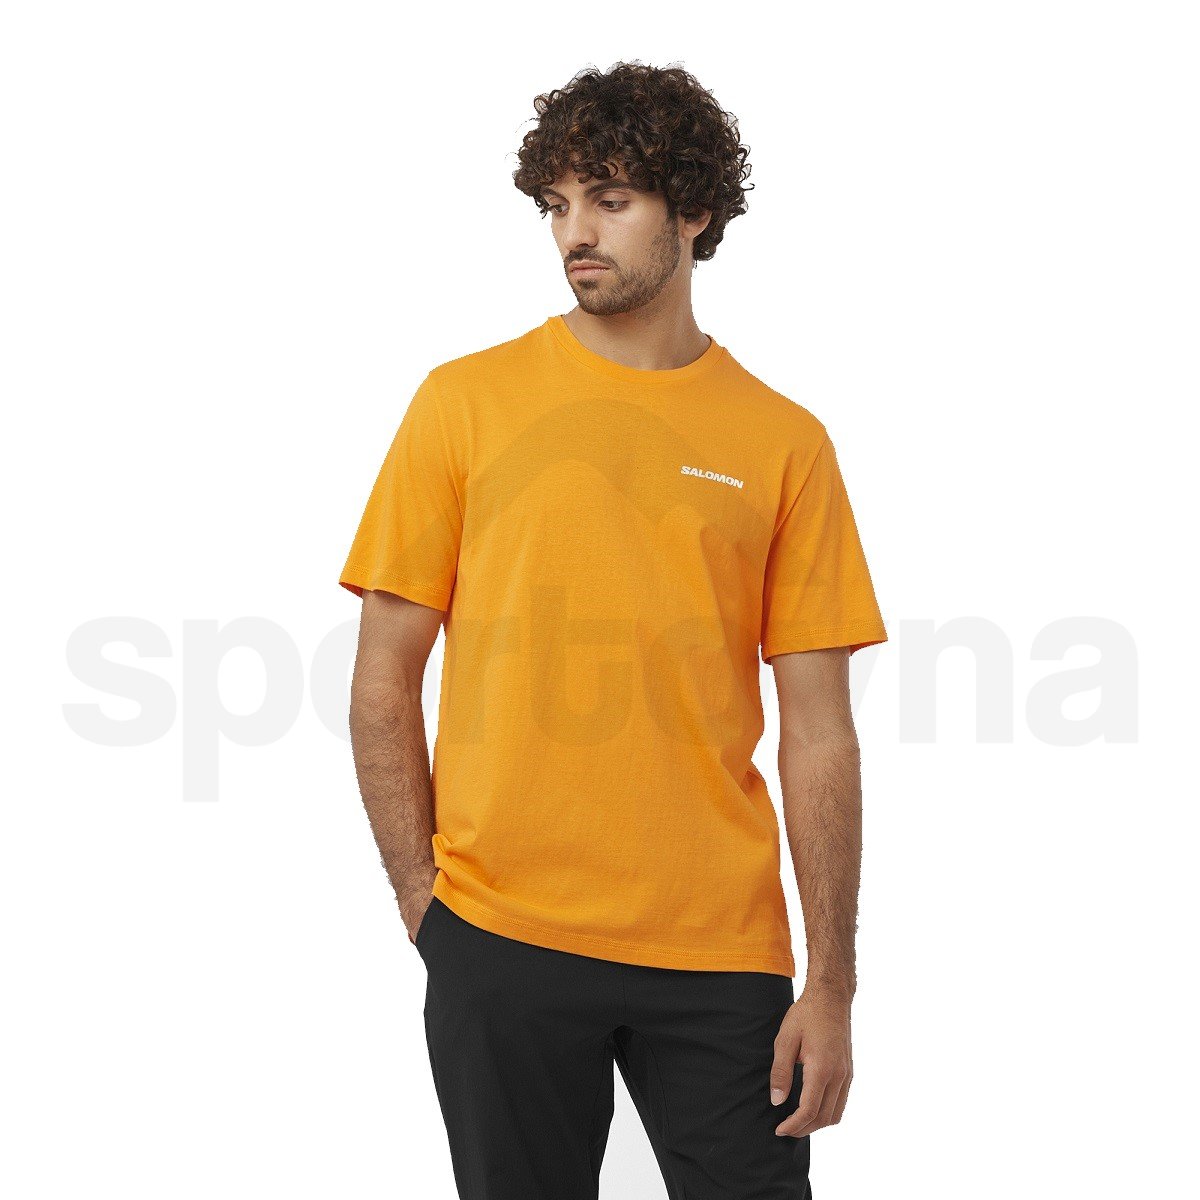 Tričko Salomon Graphic Performance SS Tee M - žlutá